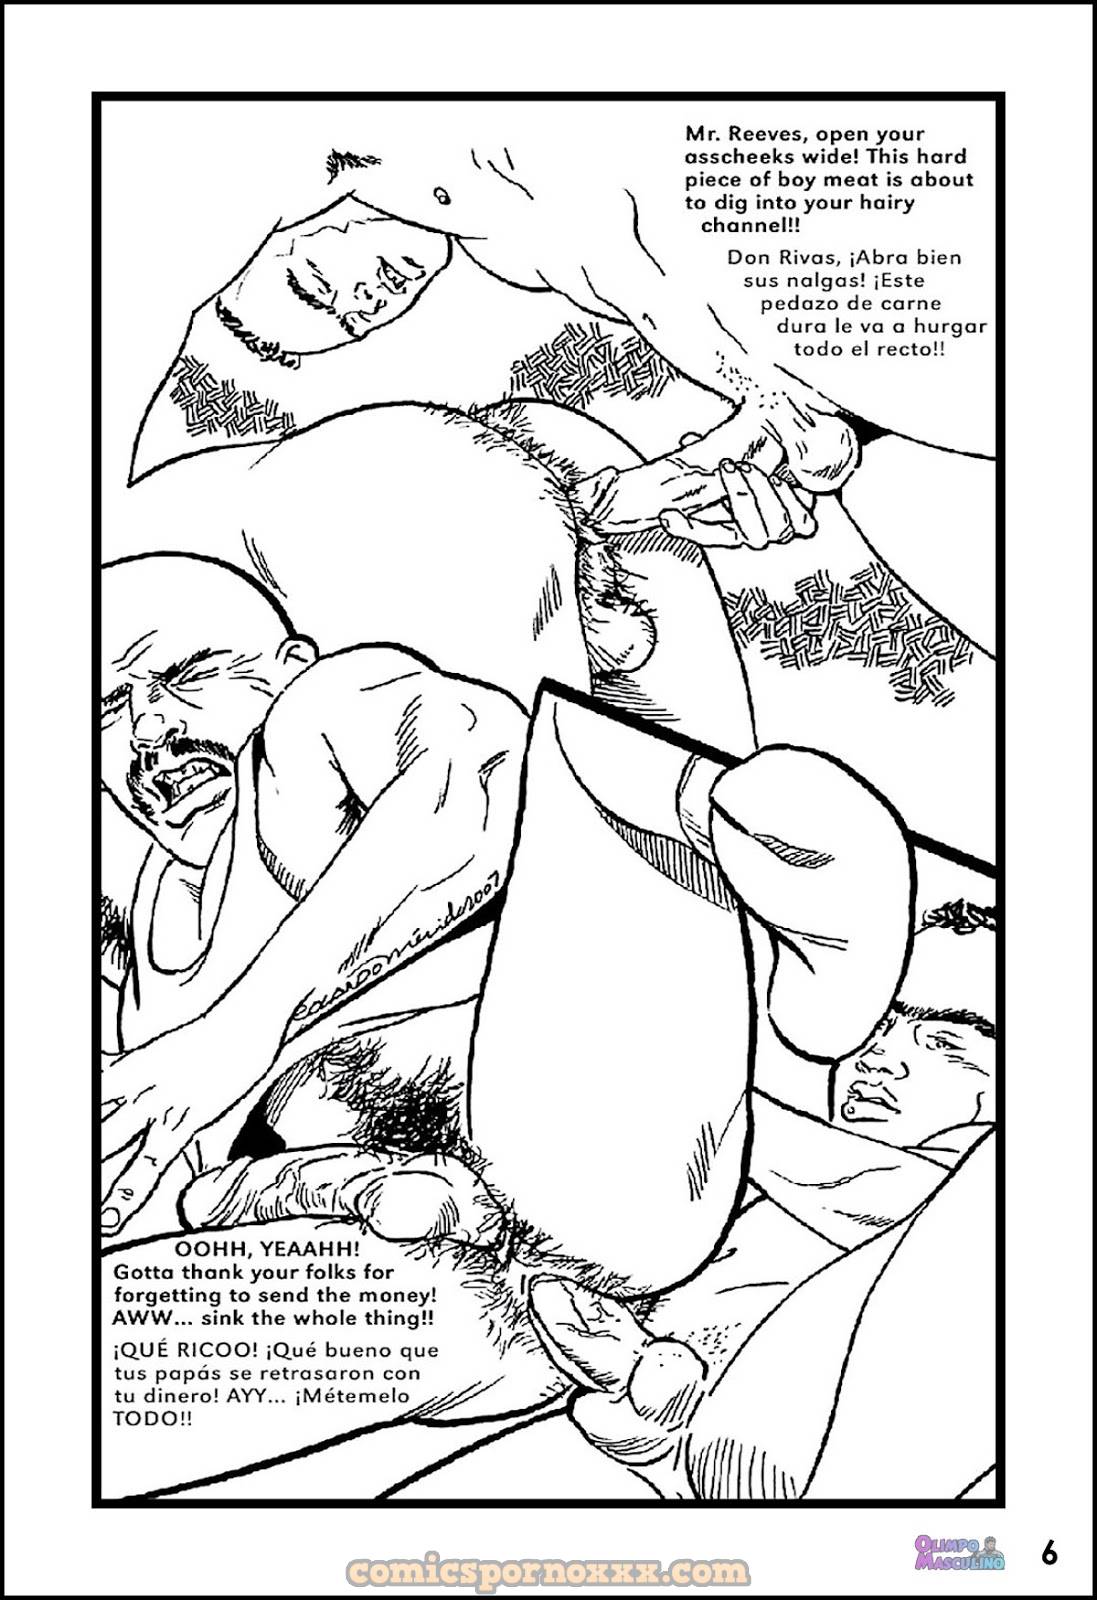 La Renta (Gay) #1 - 6 - Comics Porno - Hentai Manga - Cartoon XXX